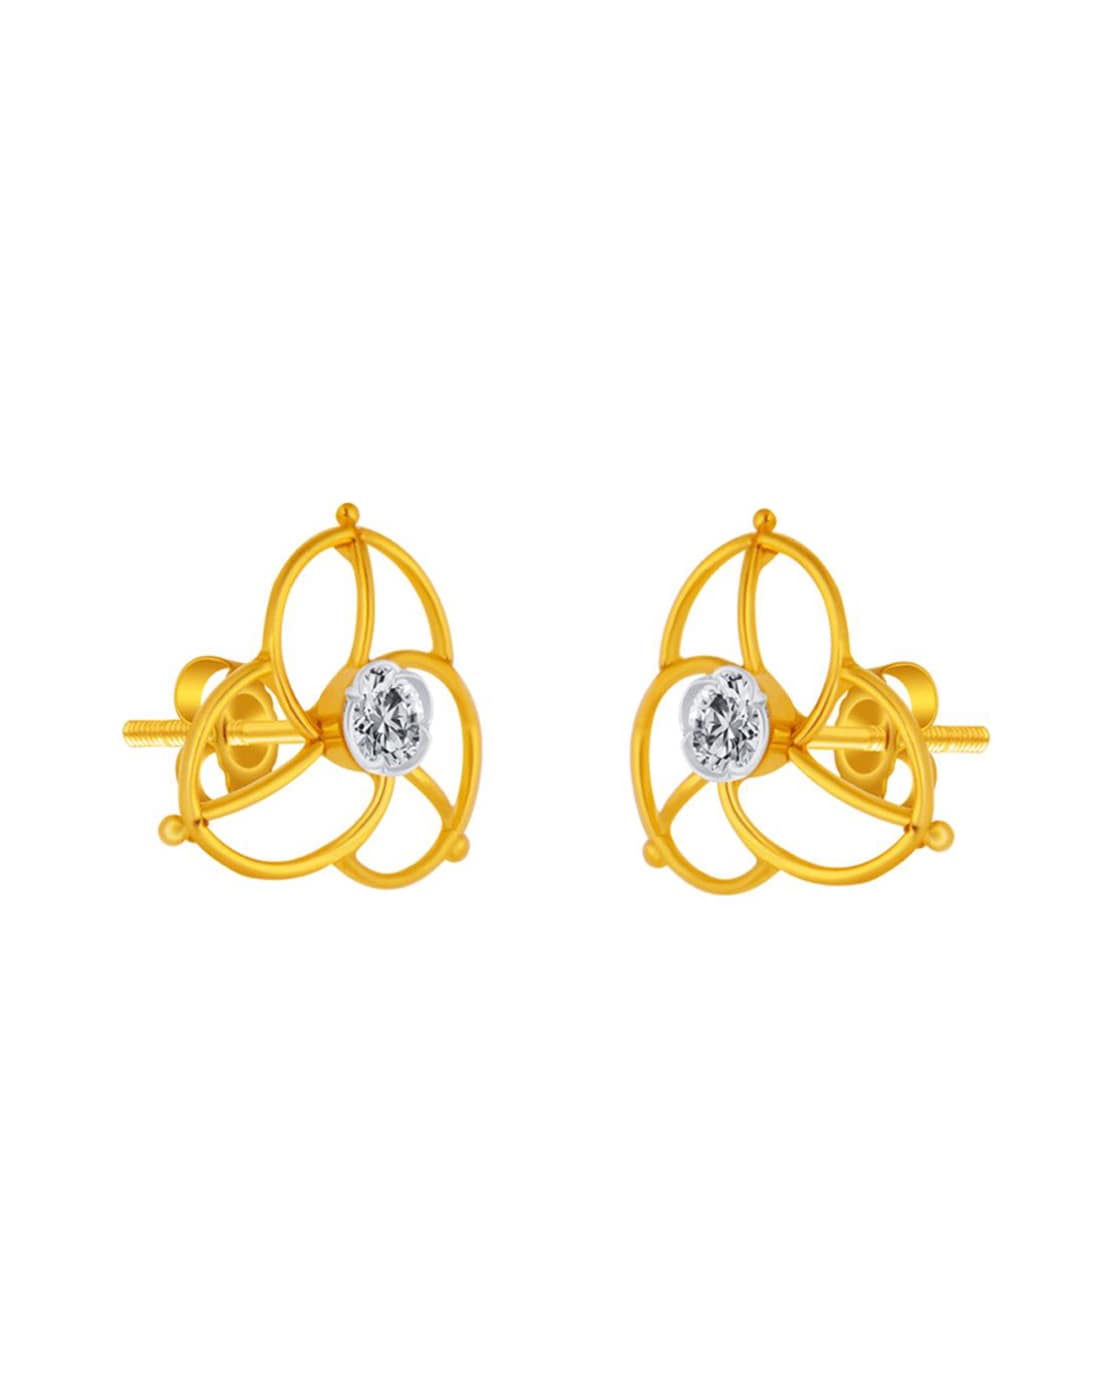 Gold & Diamond Jewellery Online | Latest Jewellery Design at Best Price |  PC Chandra Jewellers